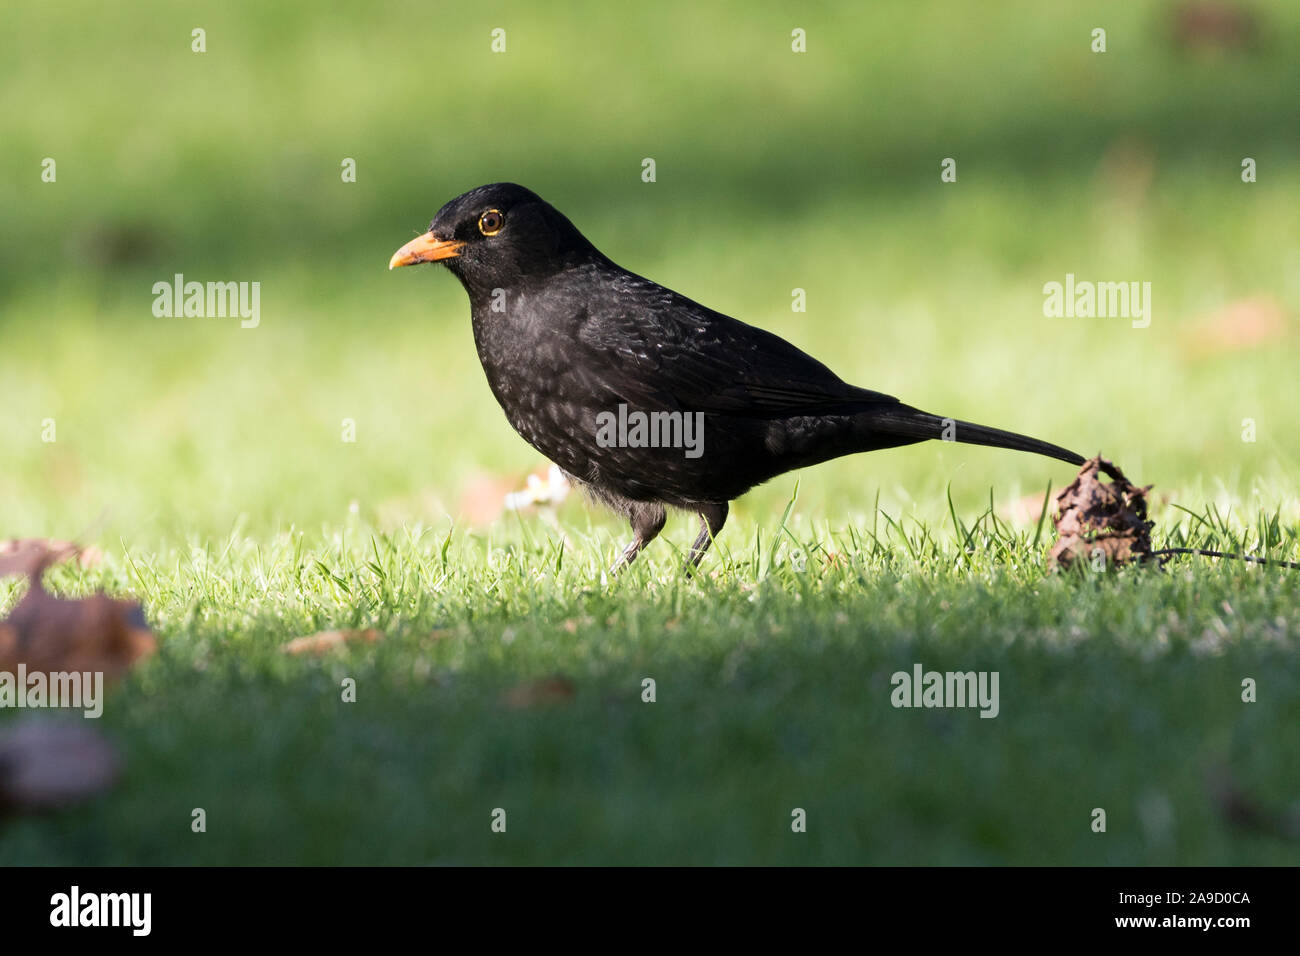 Male blackbird on green lawn Stock Photo